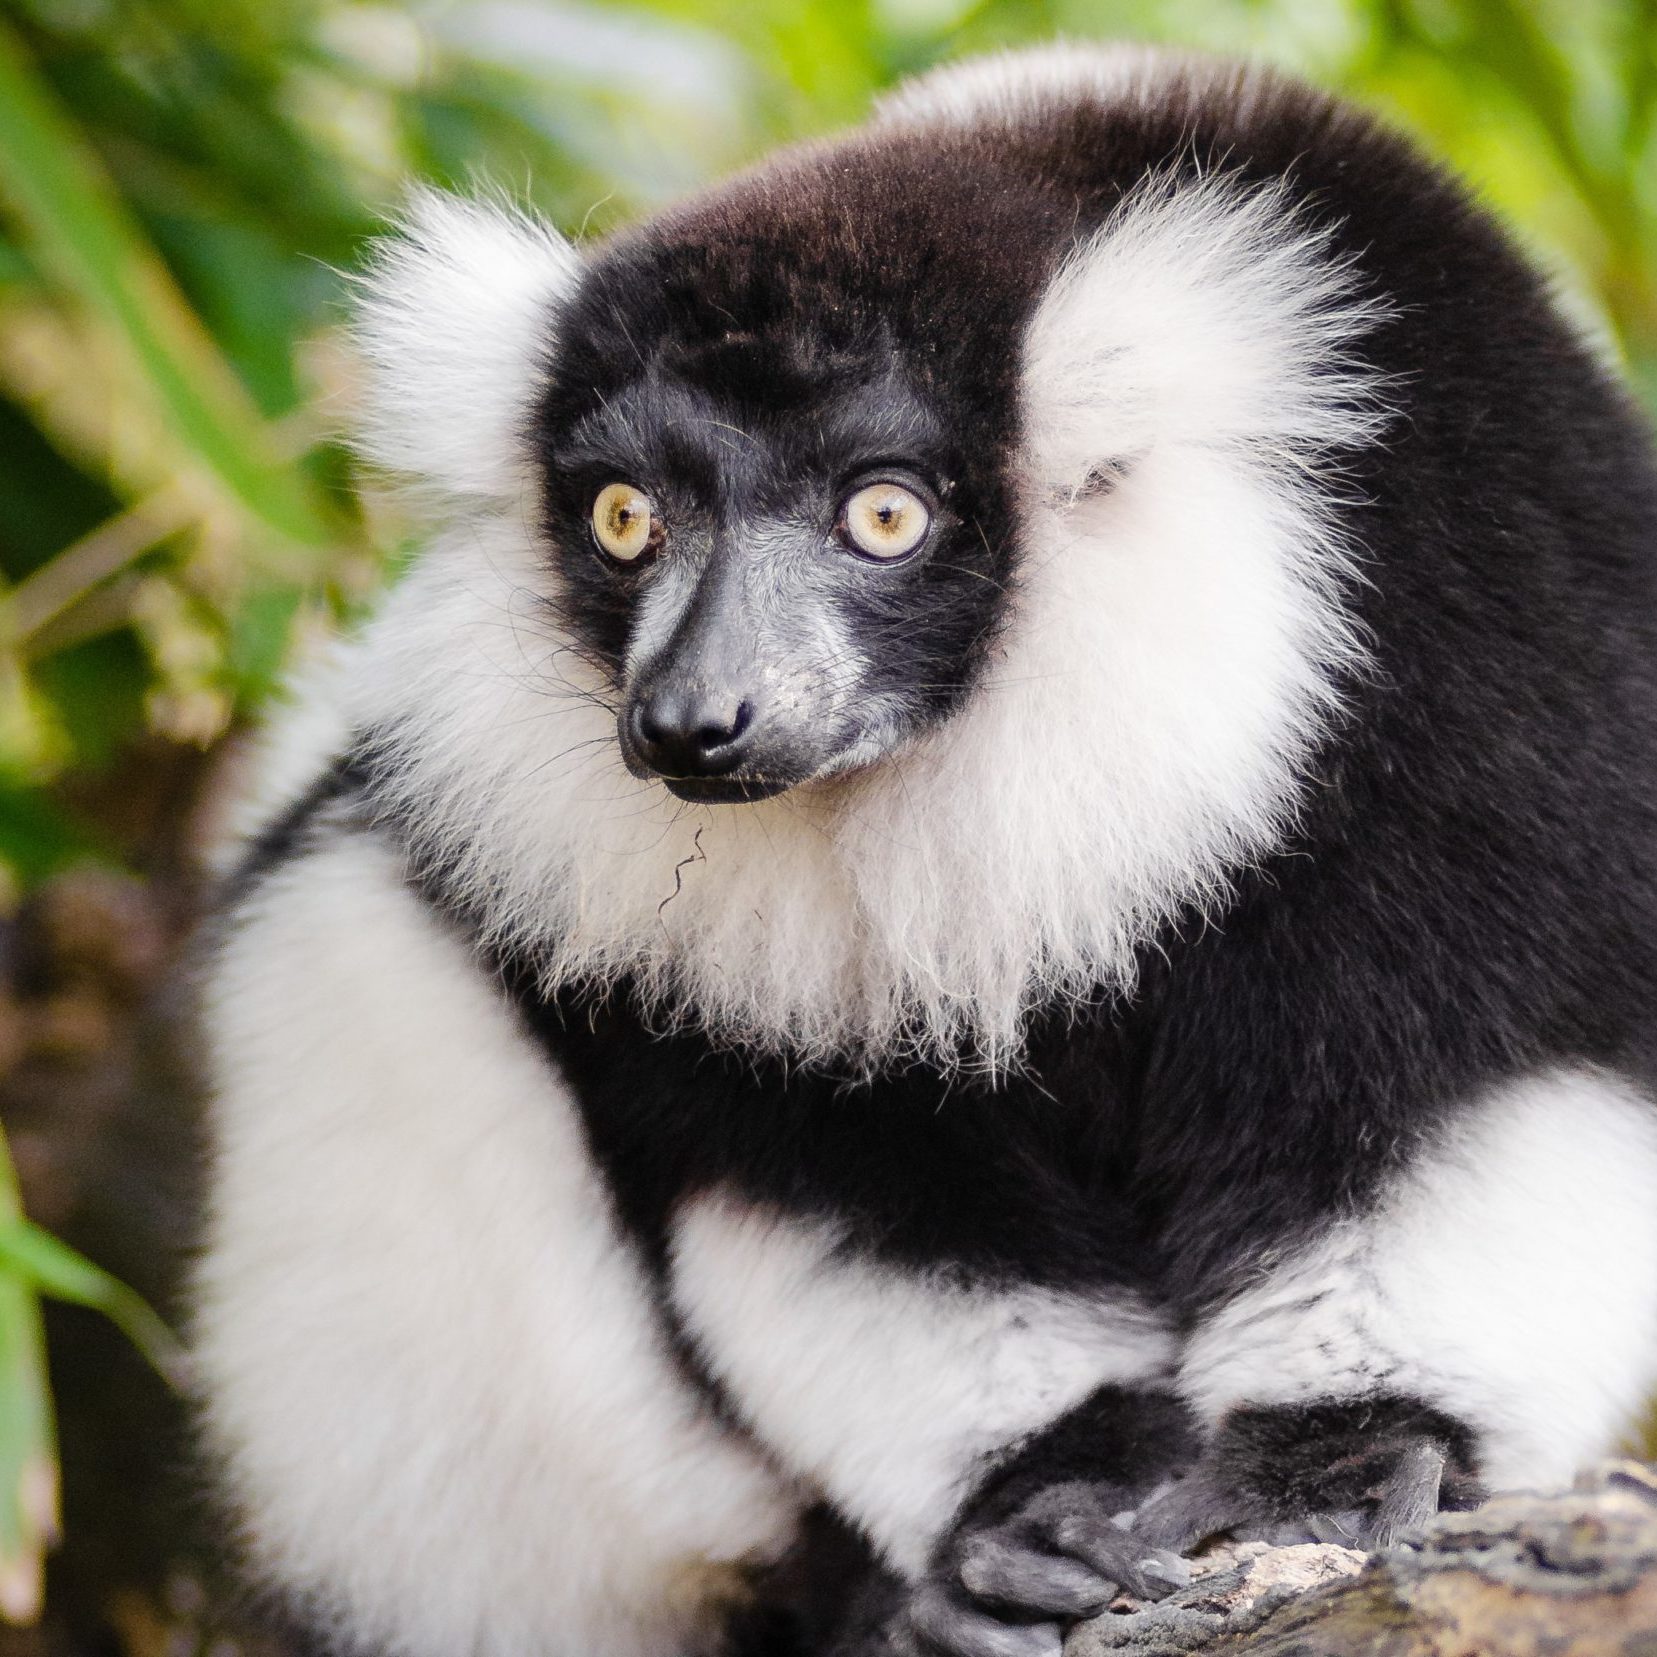 Black_and_white_ruffed_lemur_of_the_genus_Varecia